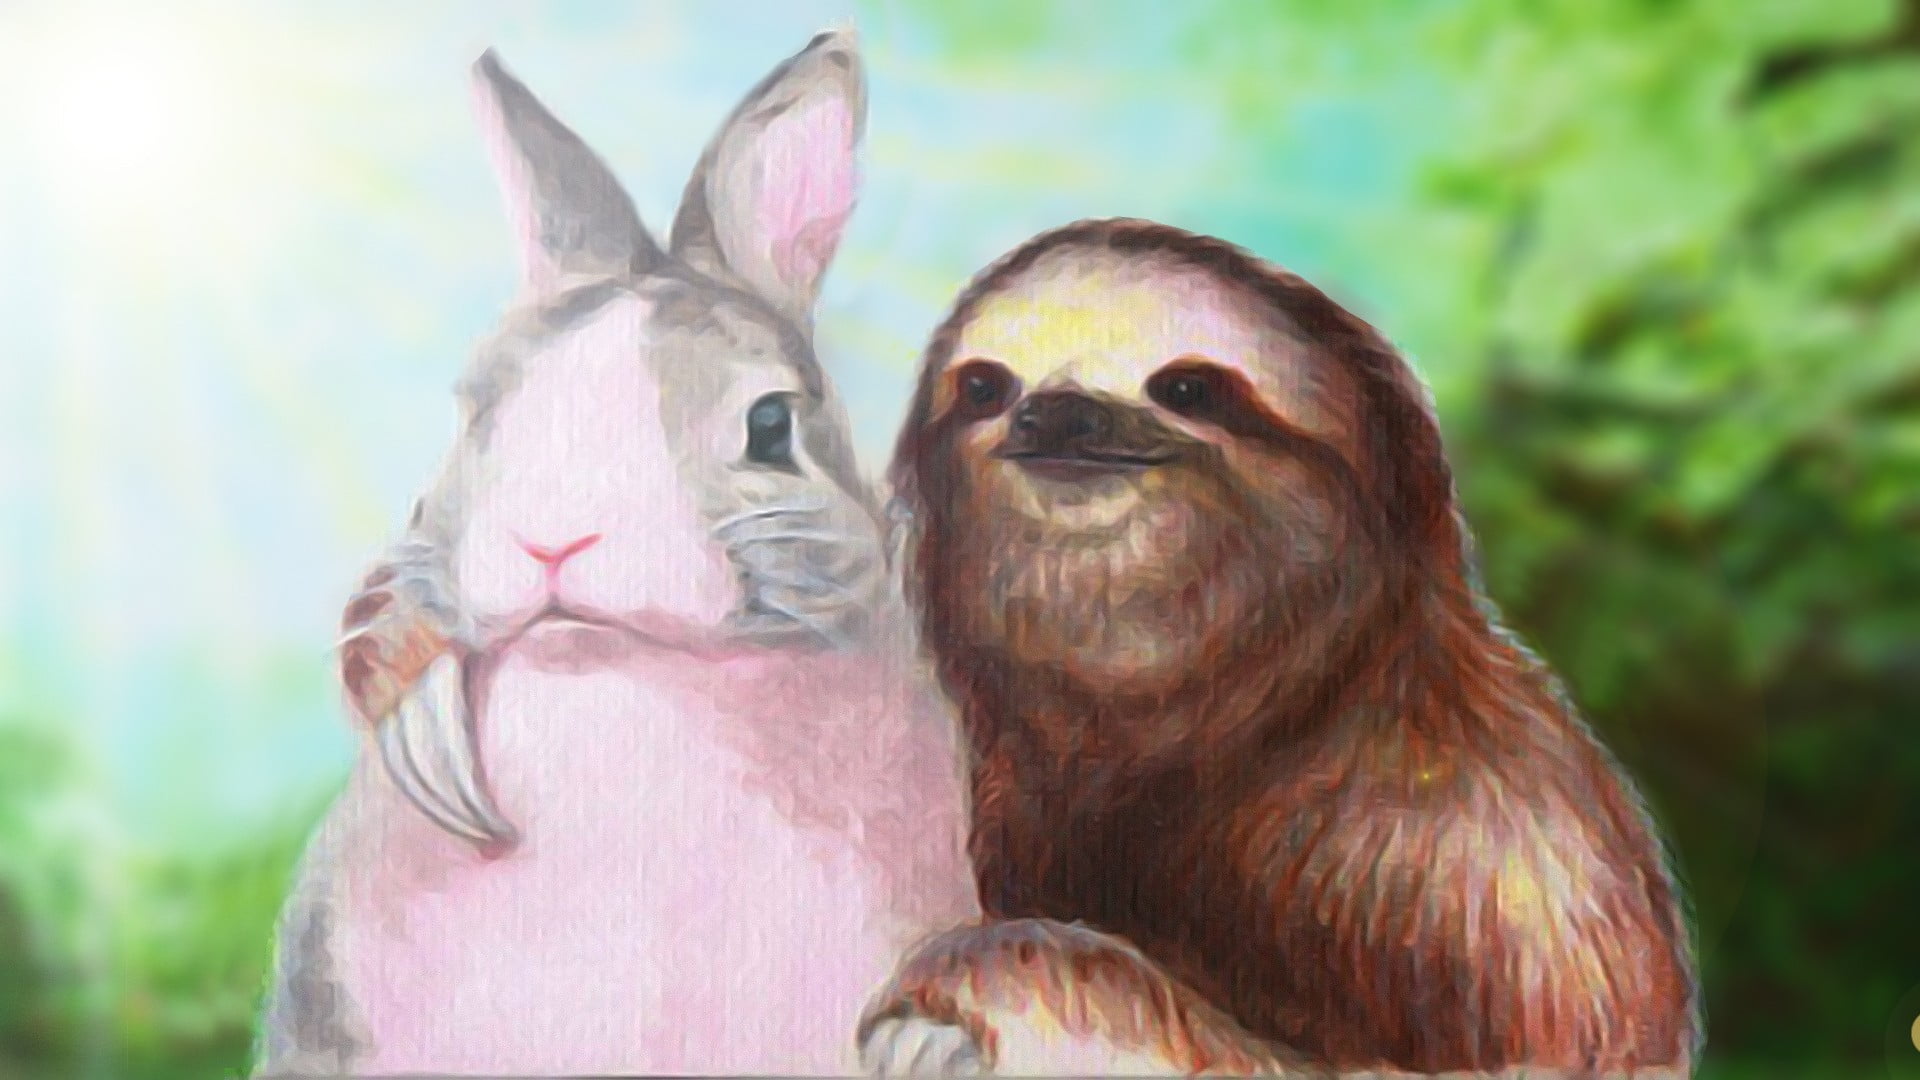 sloth and rabbit painting, humor, sloths, rabbits, animal themes